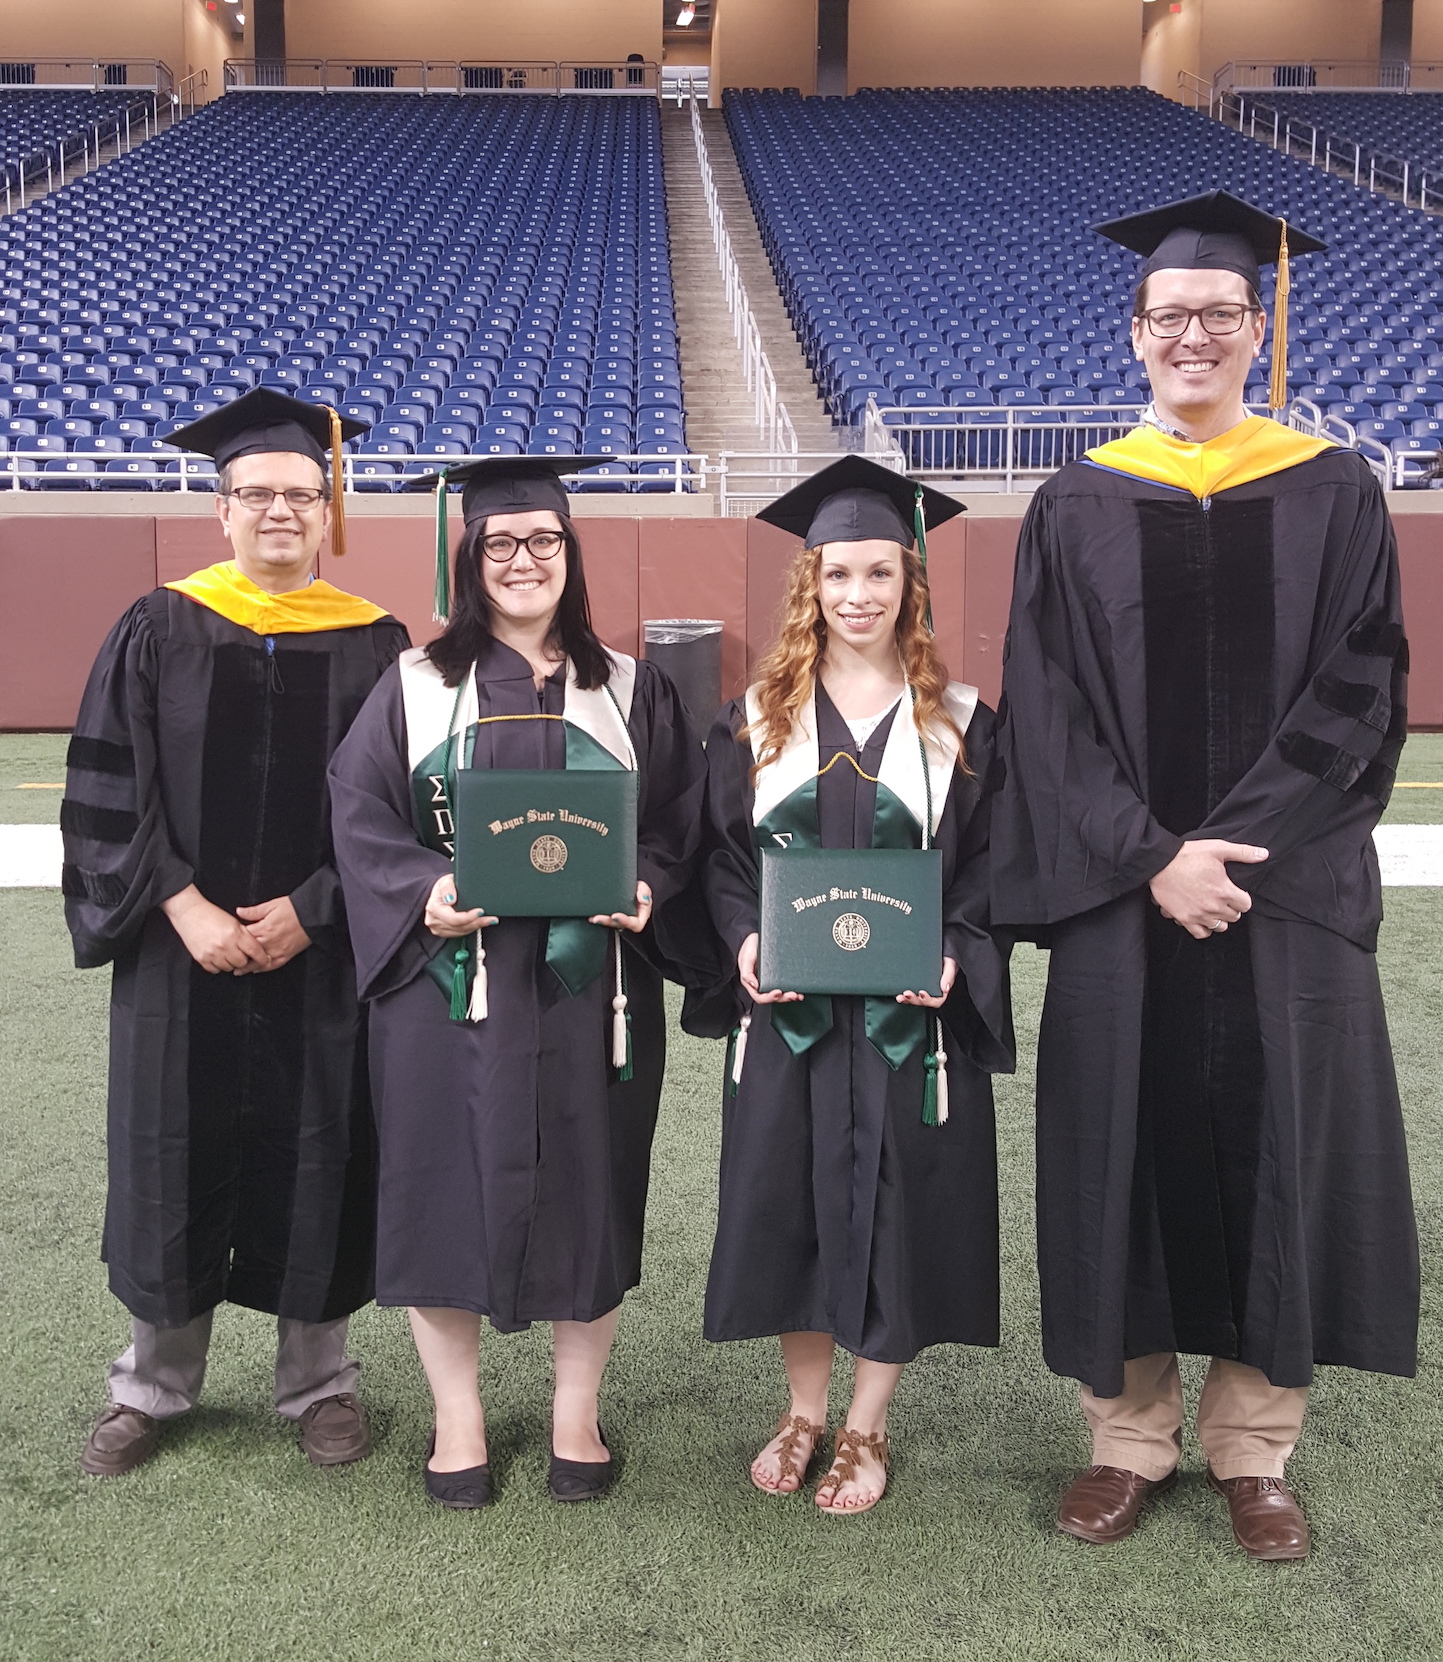 Graduates Renee Ludlam and Rachael Merritt holding their degrees.